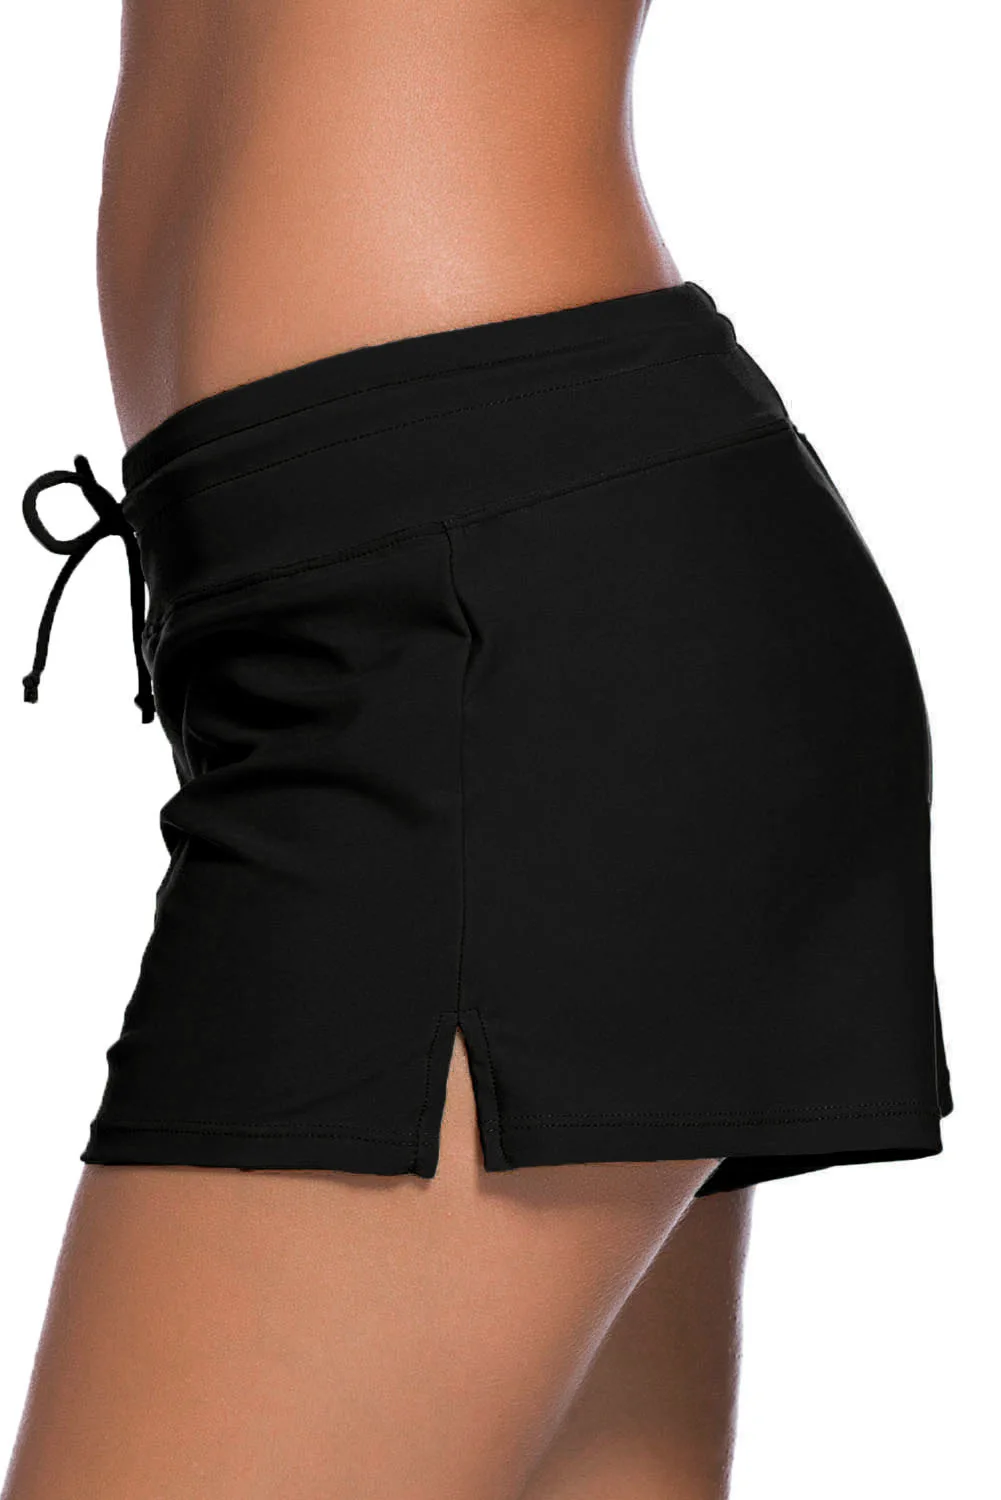 Women Summer Swimming Trunks Ladies Low Waist Lace Up Beach Pants Large Size Nylon Boxer Shorts